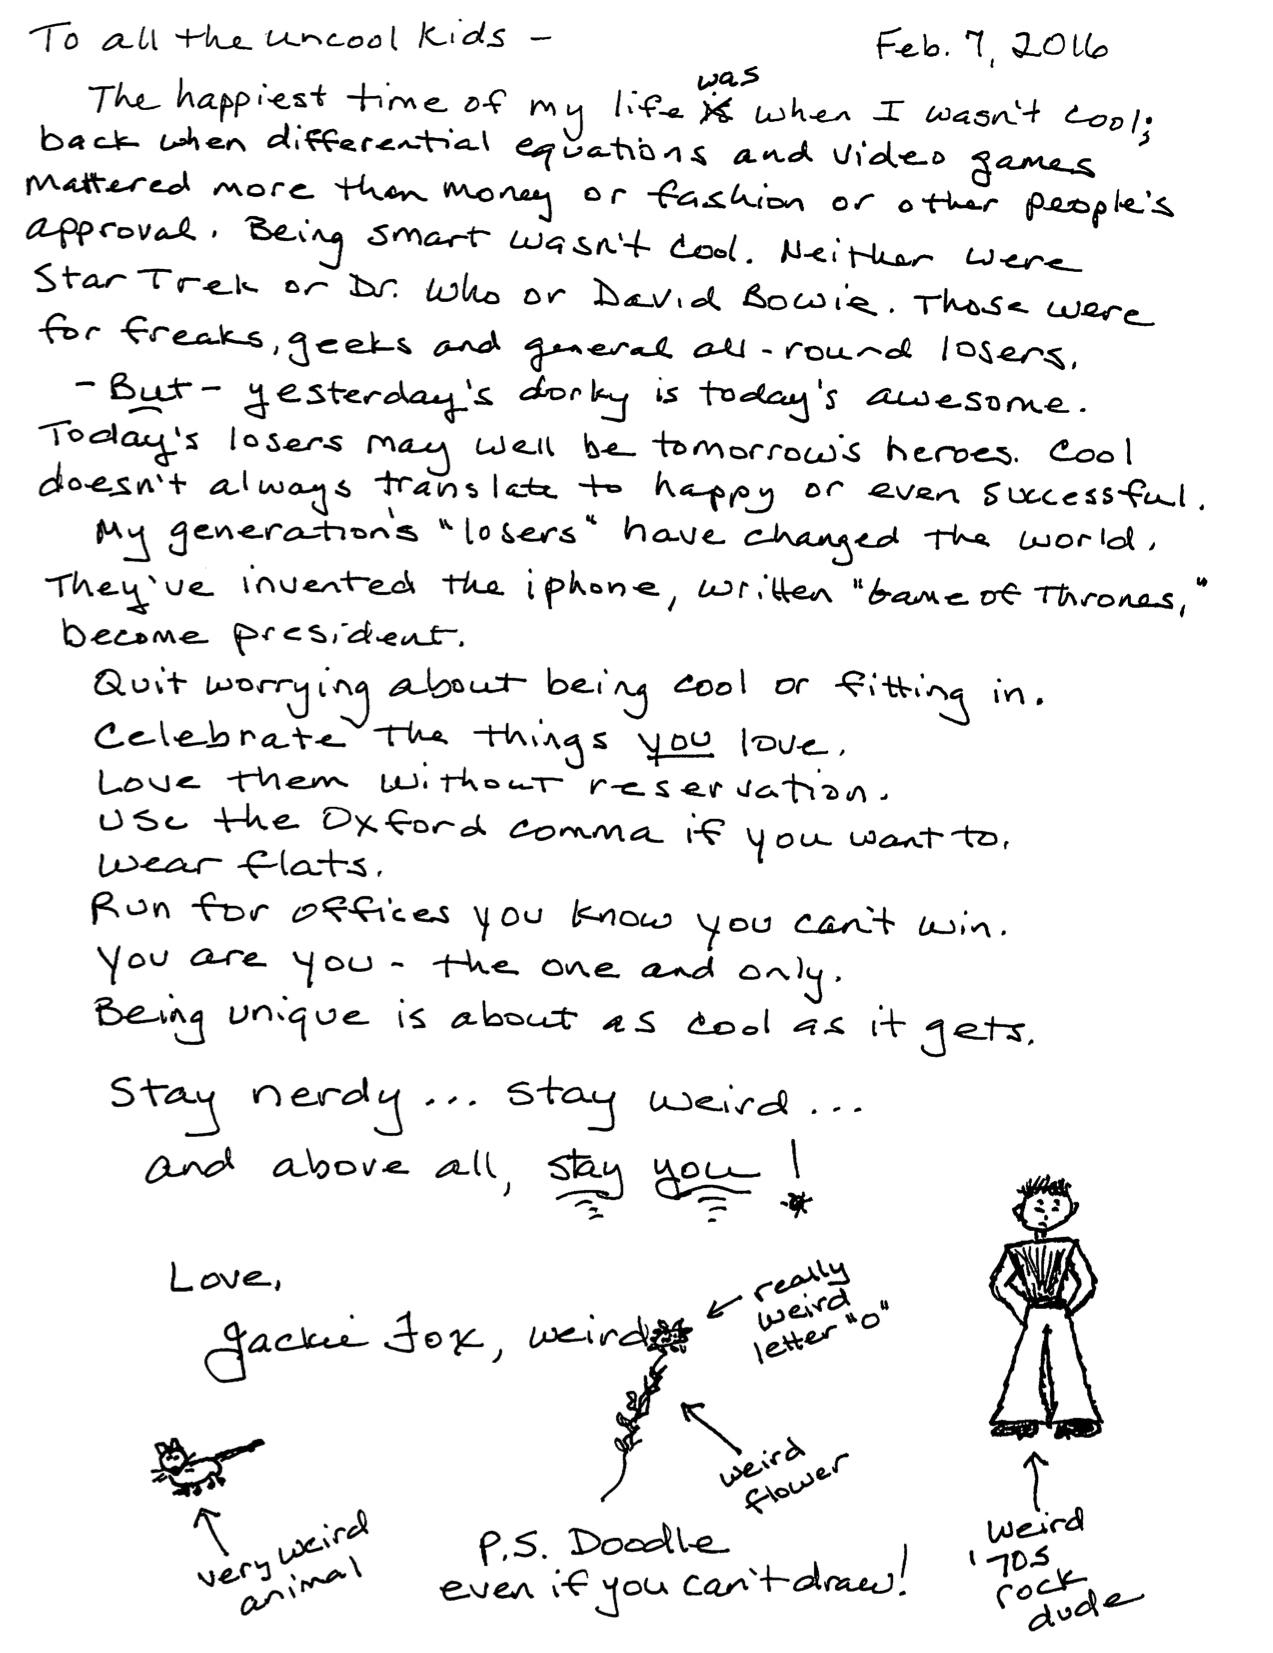 Jackie Fox's Letter, The Provocateur